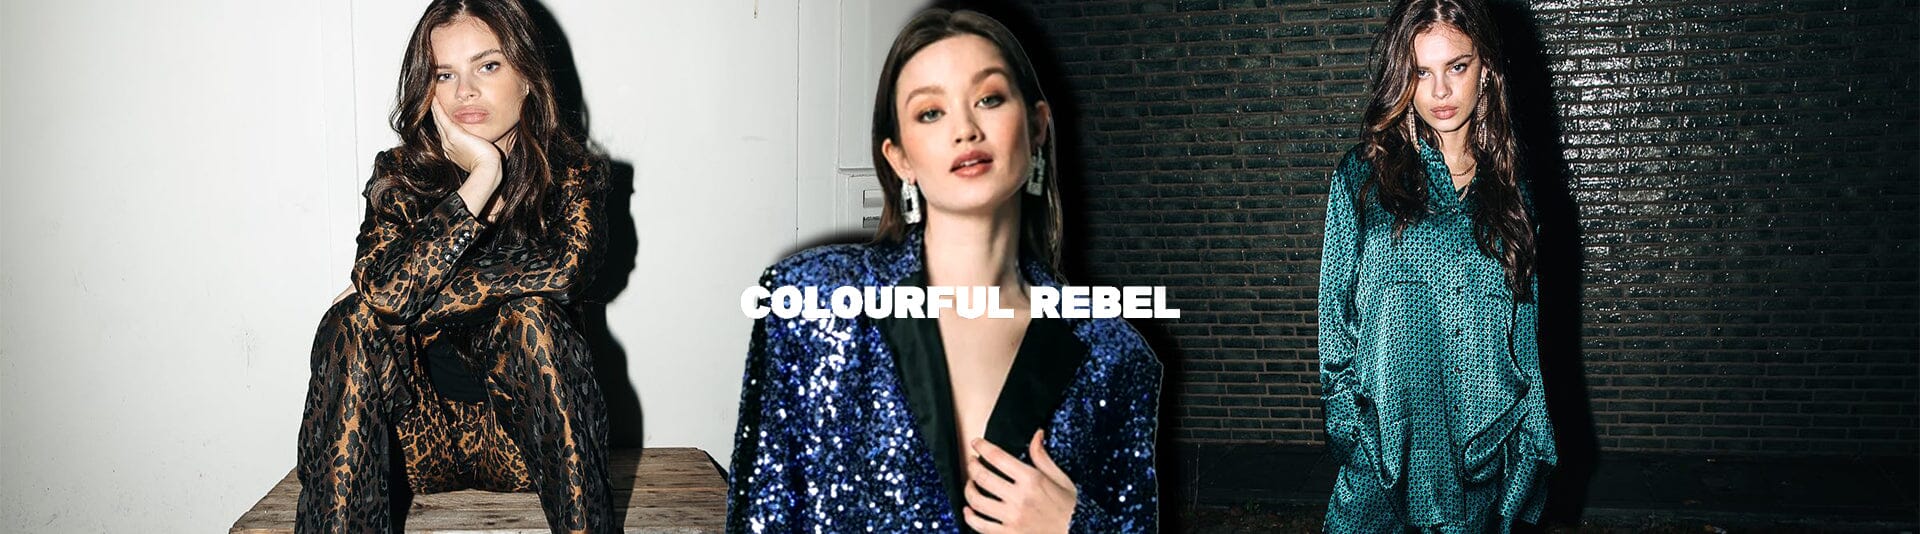 Colourful Rebel